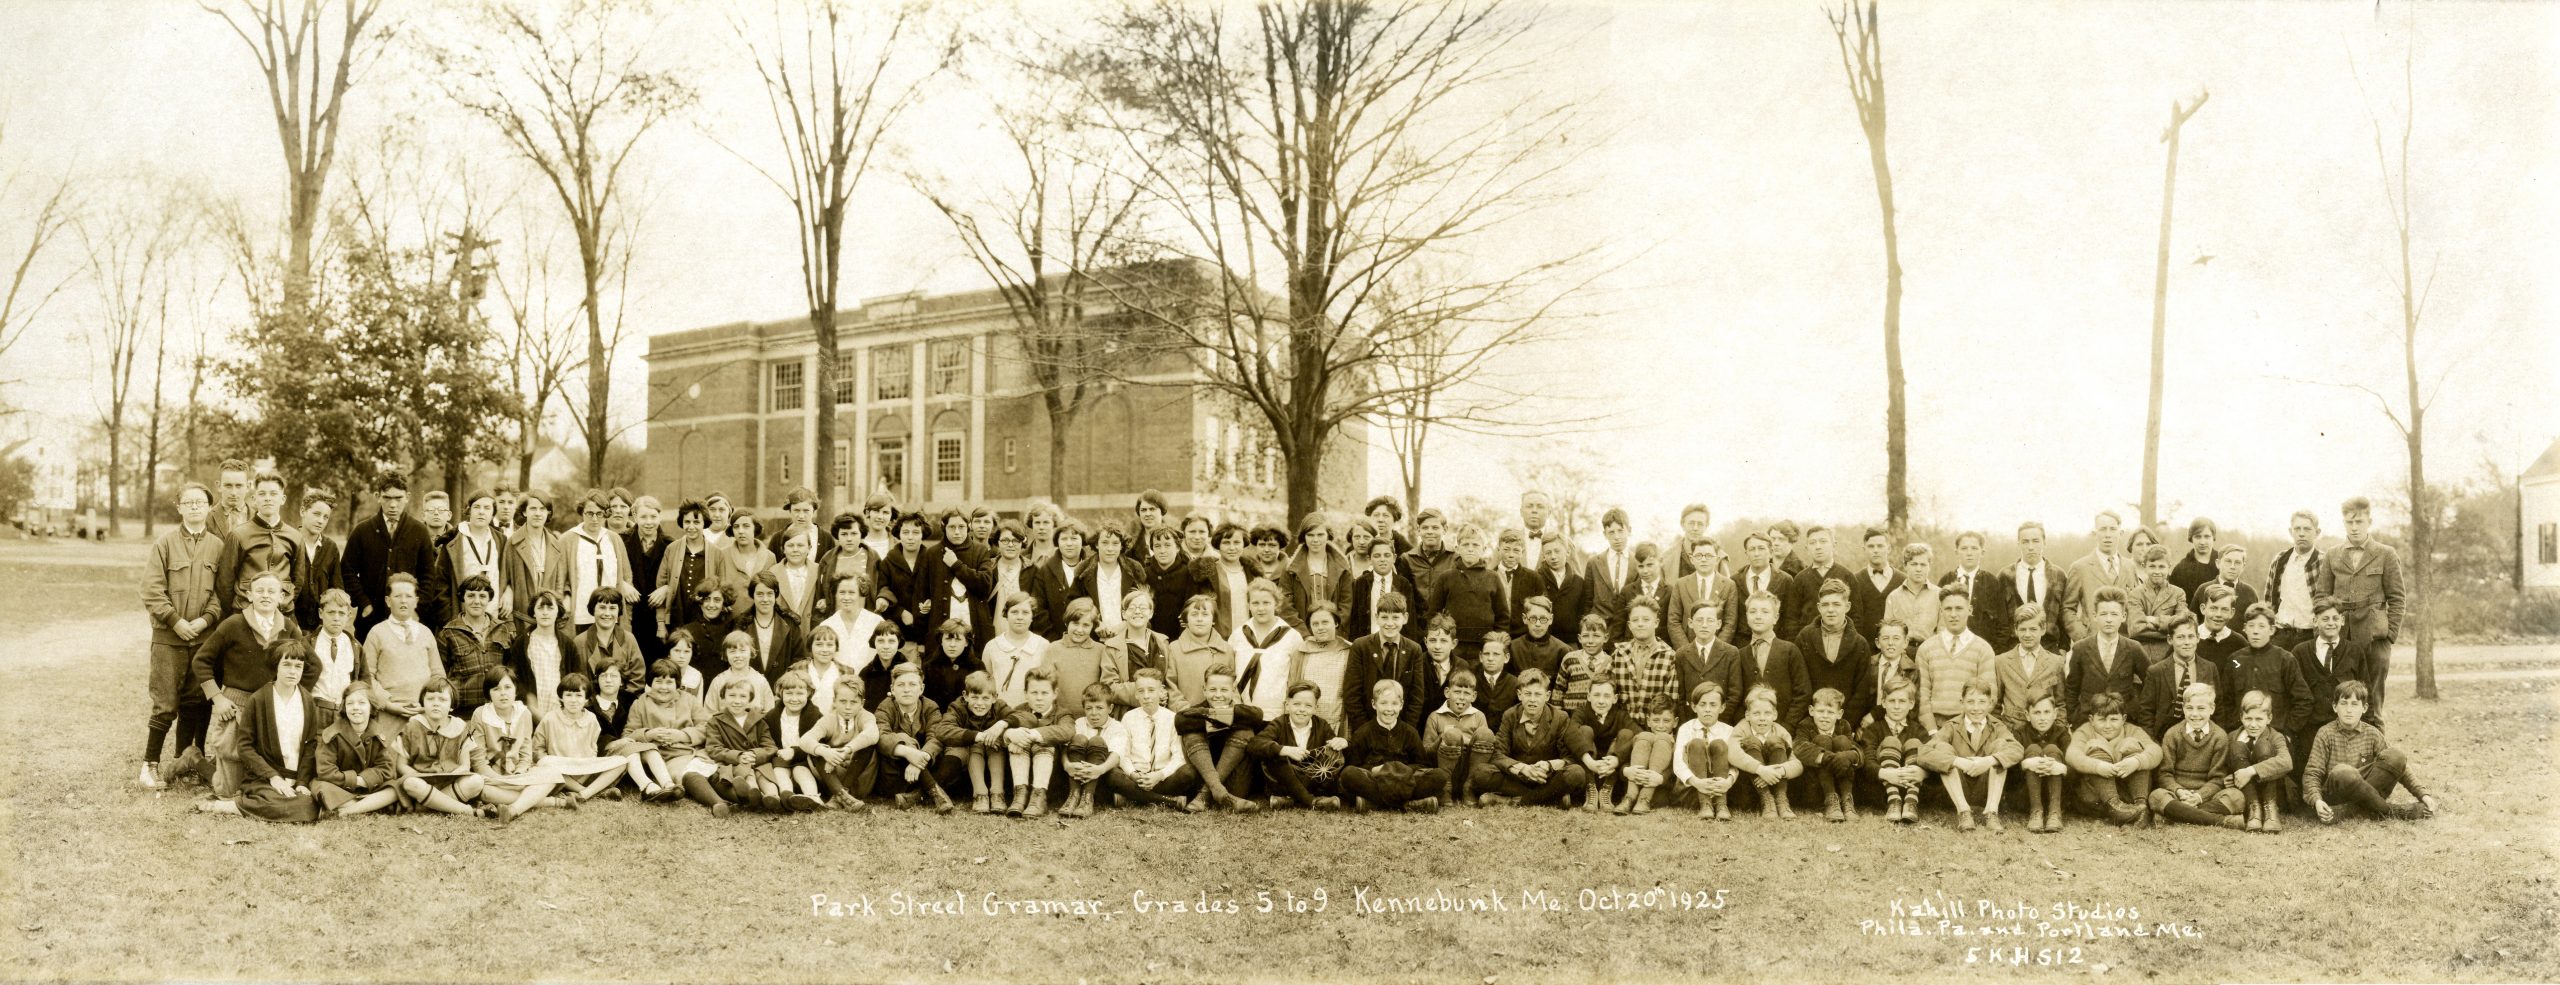 Park Street Grammar School students, Grades 5-9, 1925